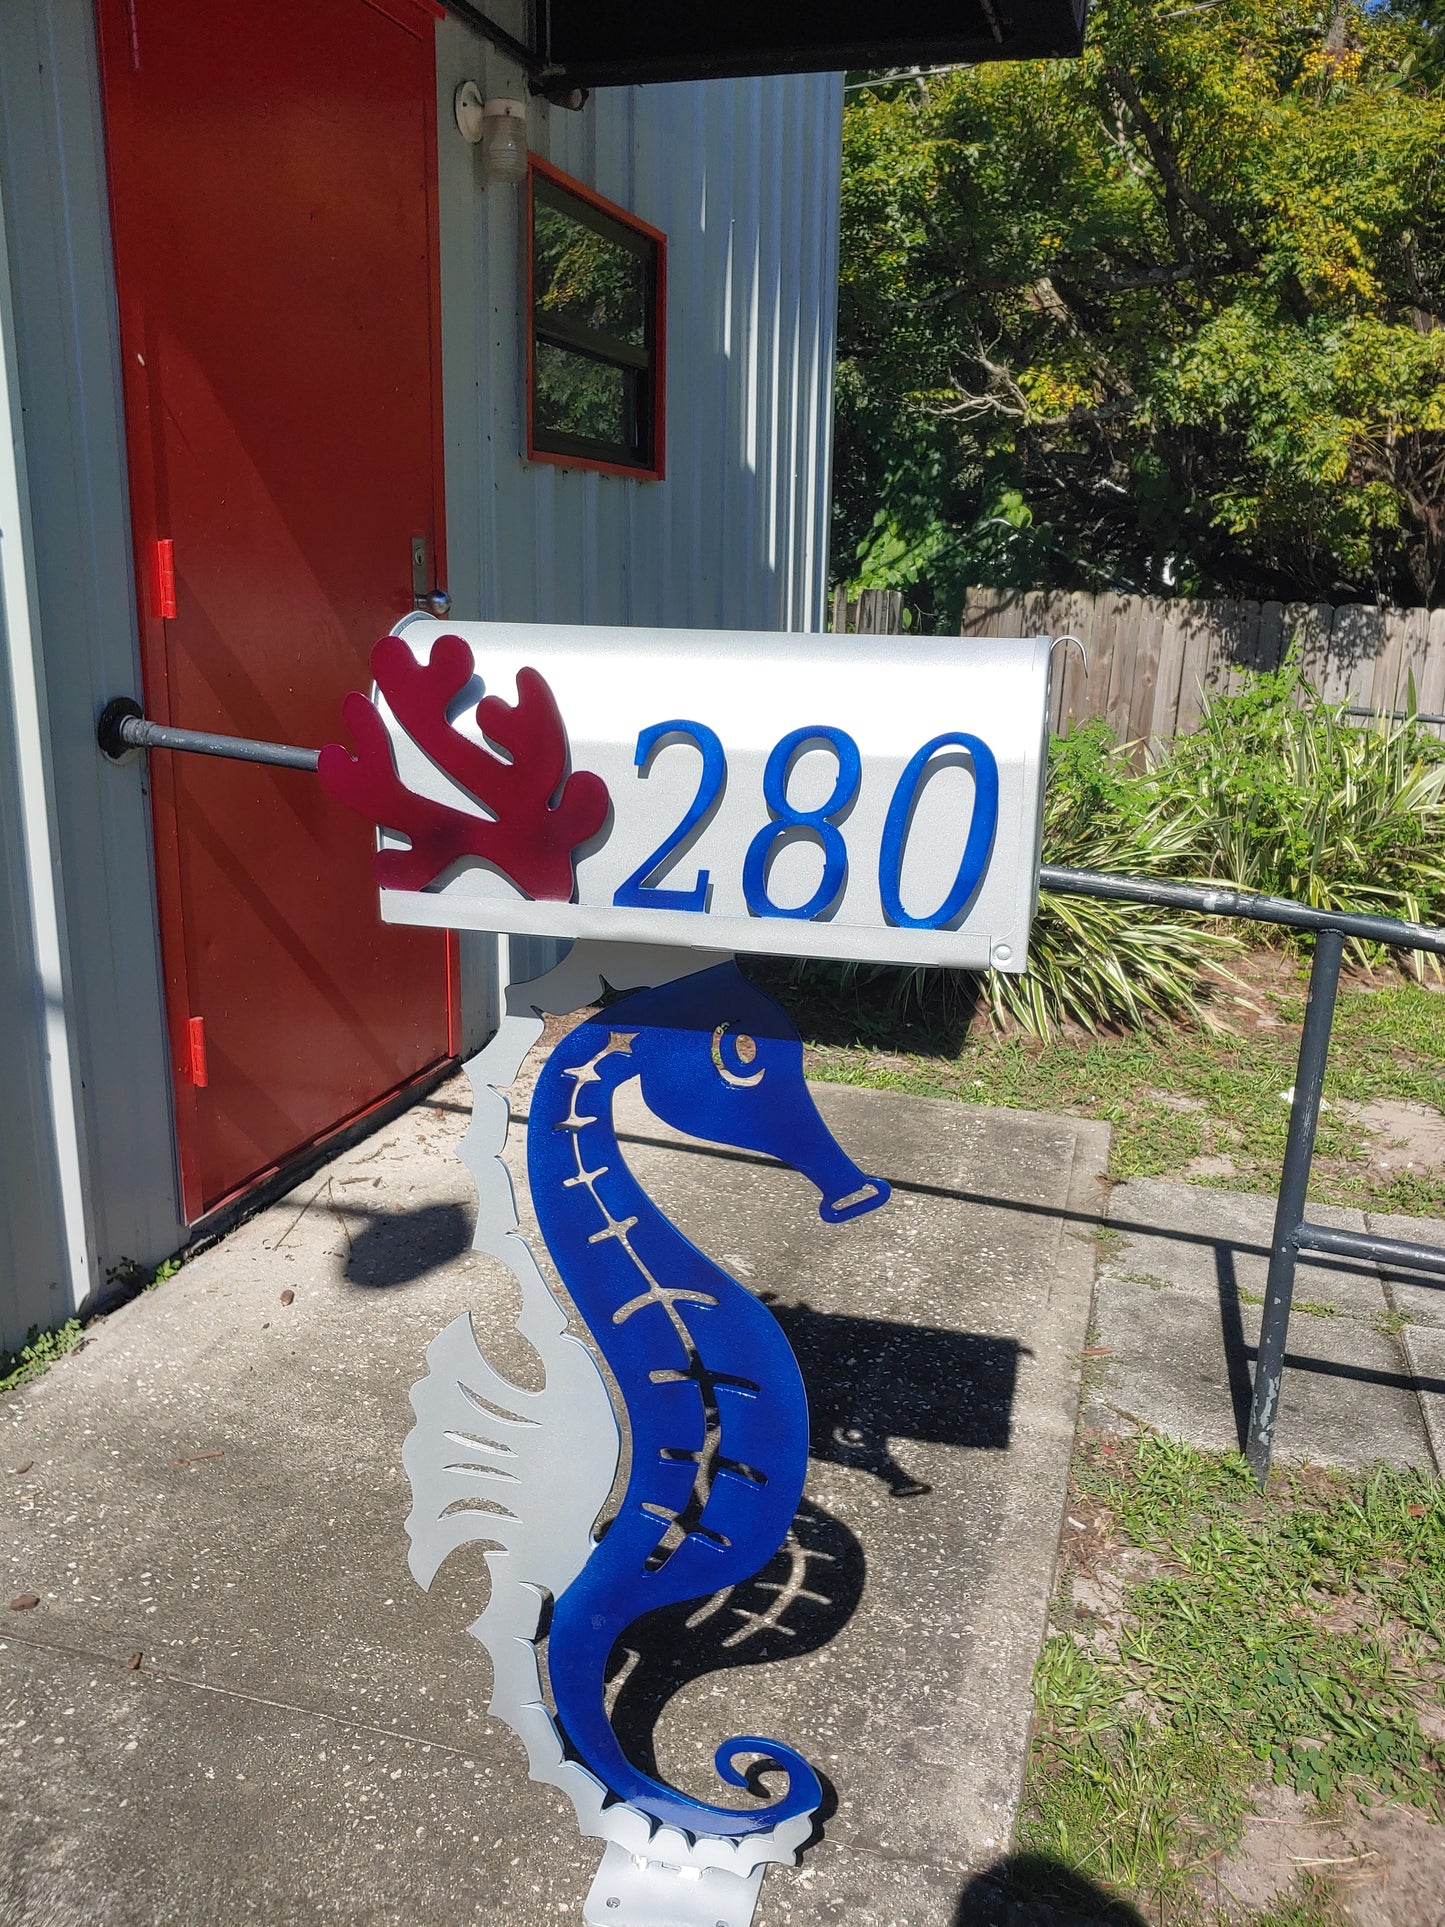 Seahorse Mailbox